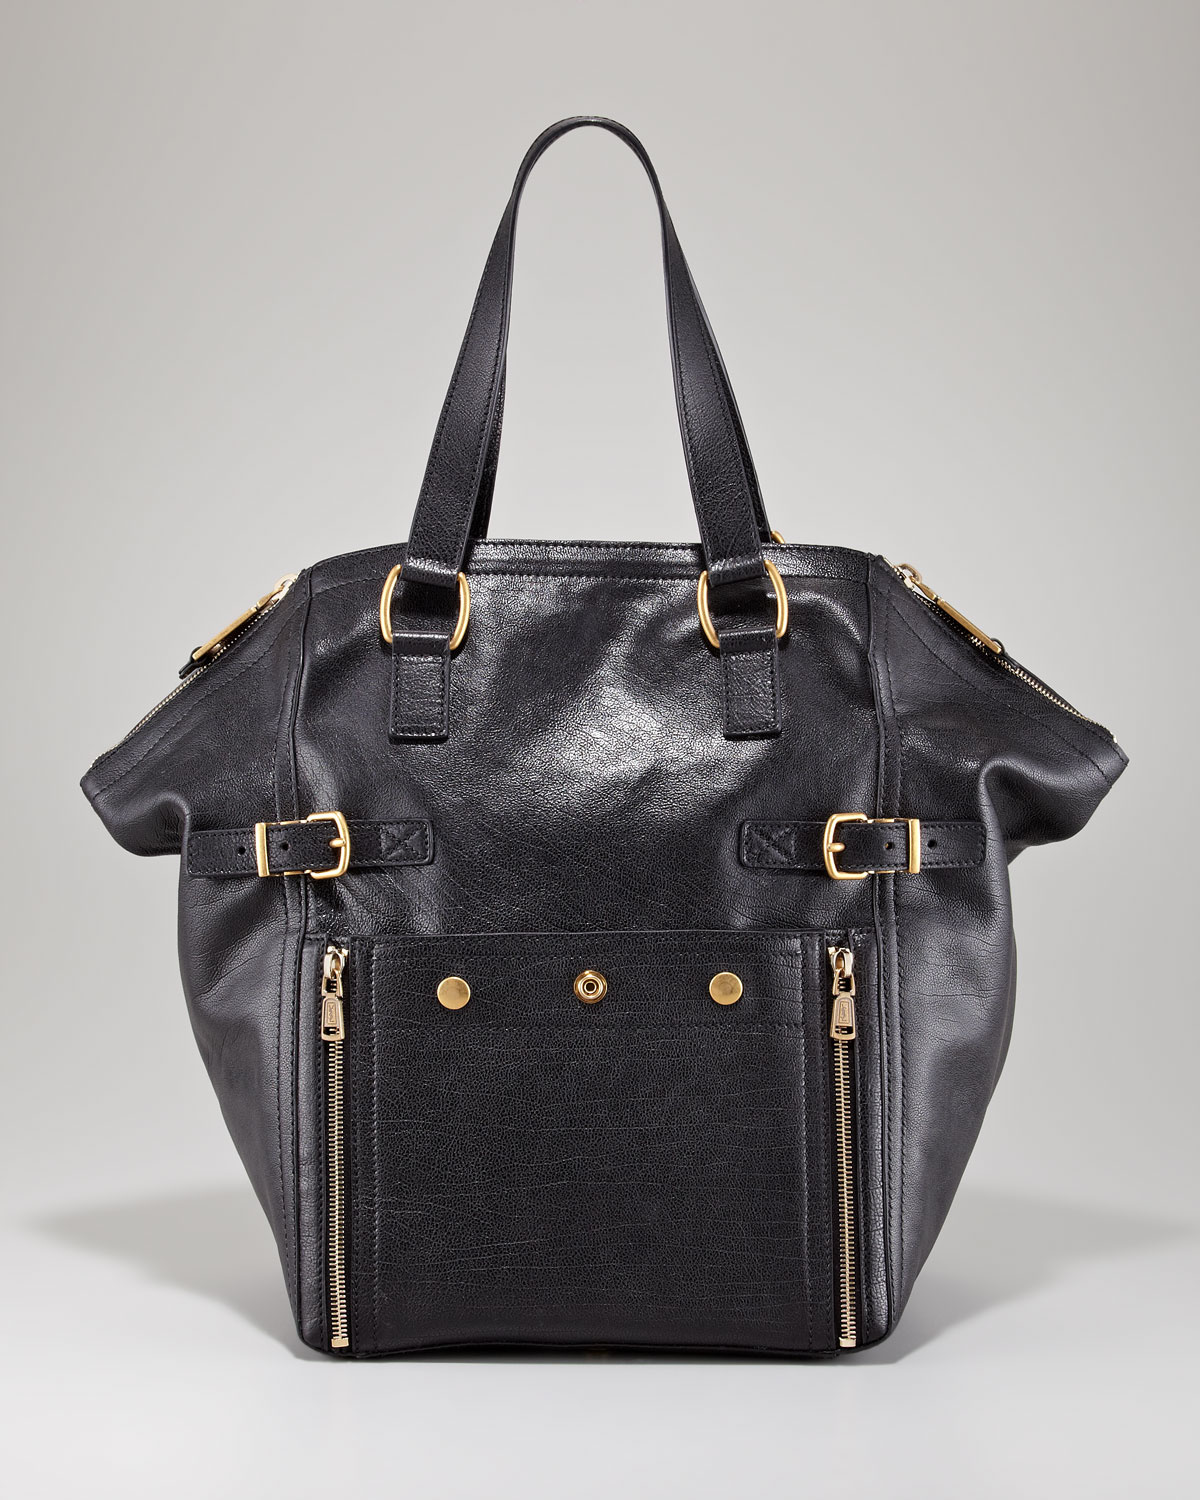 yves saint laurent replica handbags - Saint laurent Downtown Tote in Black | Lyst